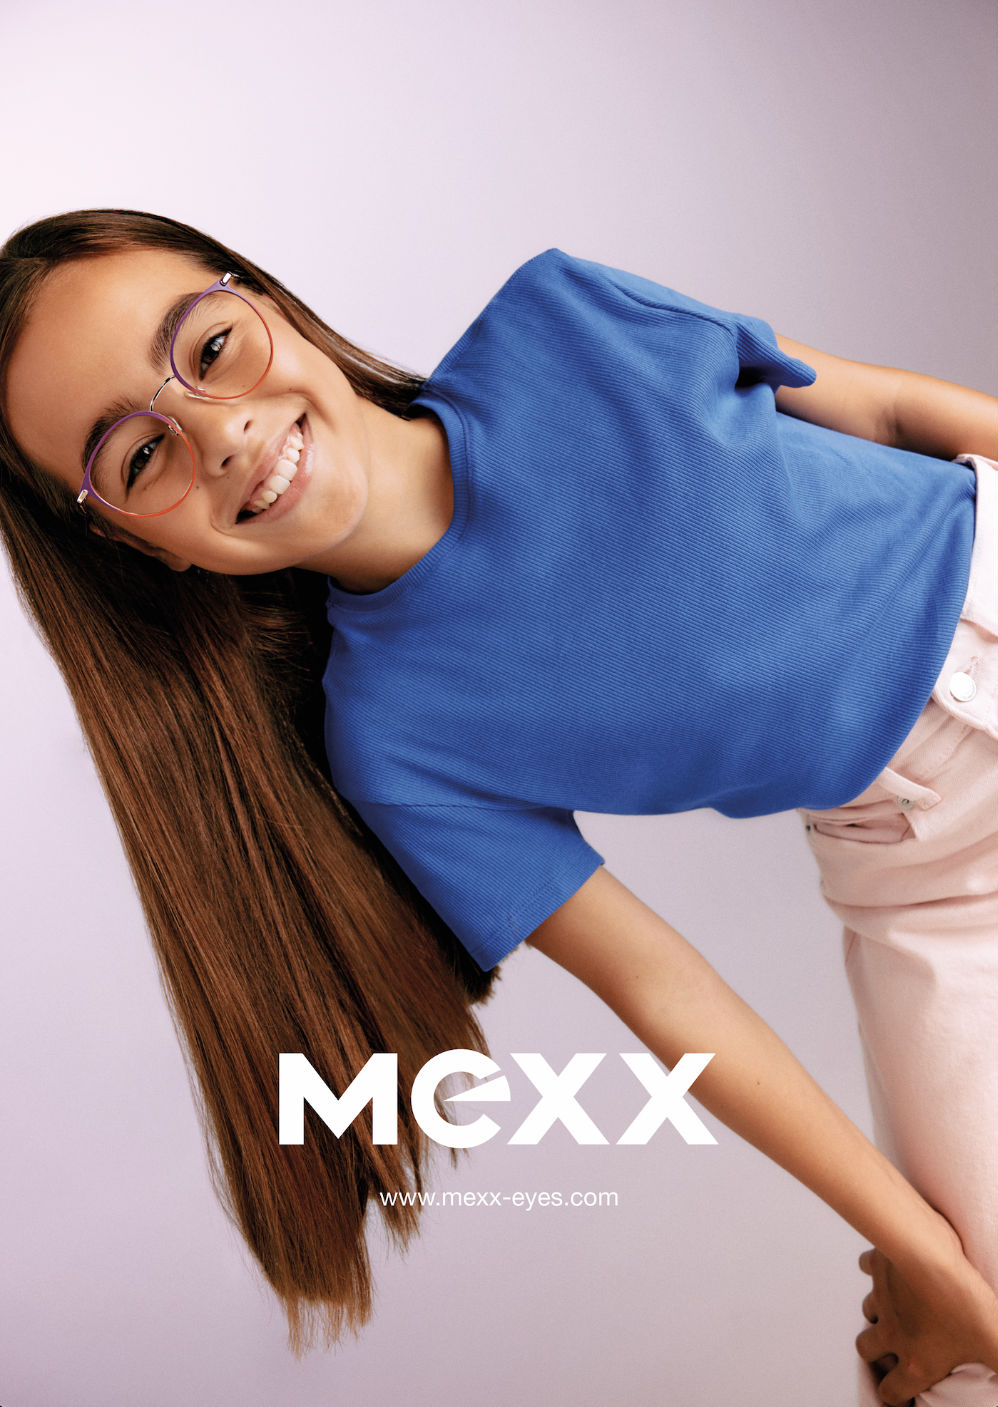 Mexx Eyewear
